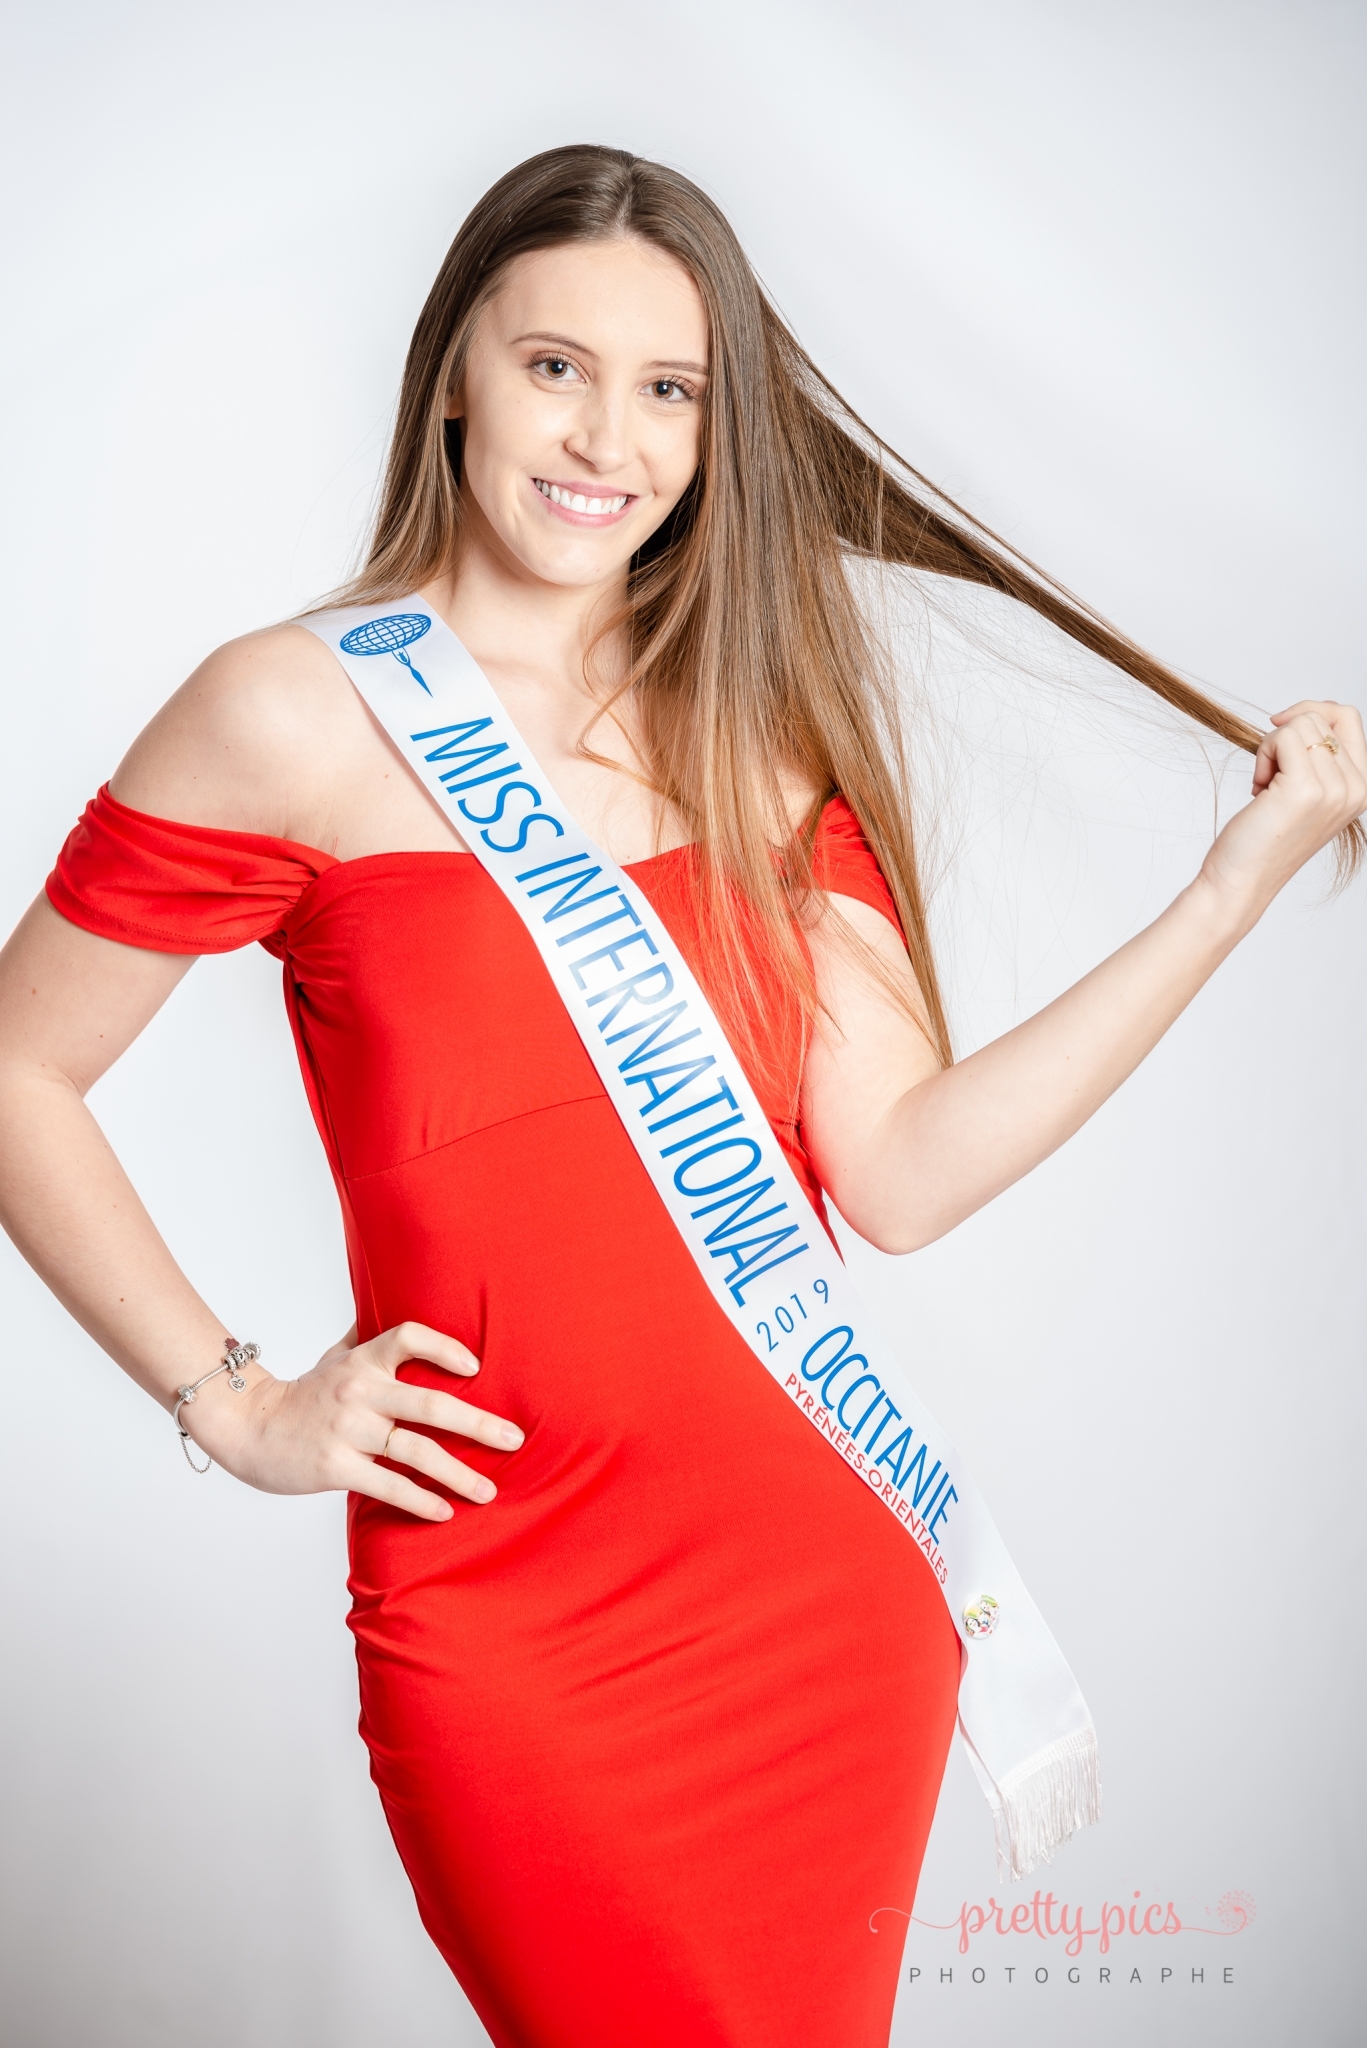 Tiphaine Stégura, Miss International Occitanie 2019